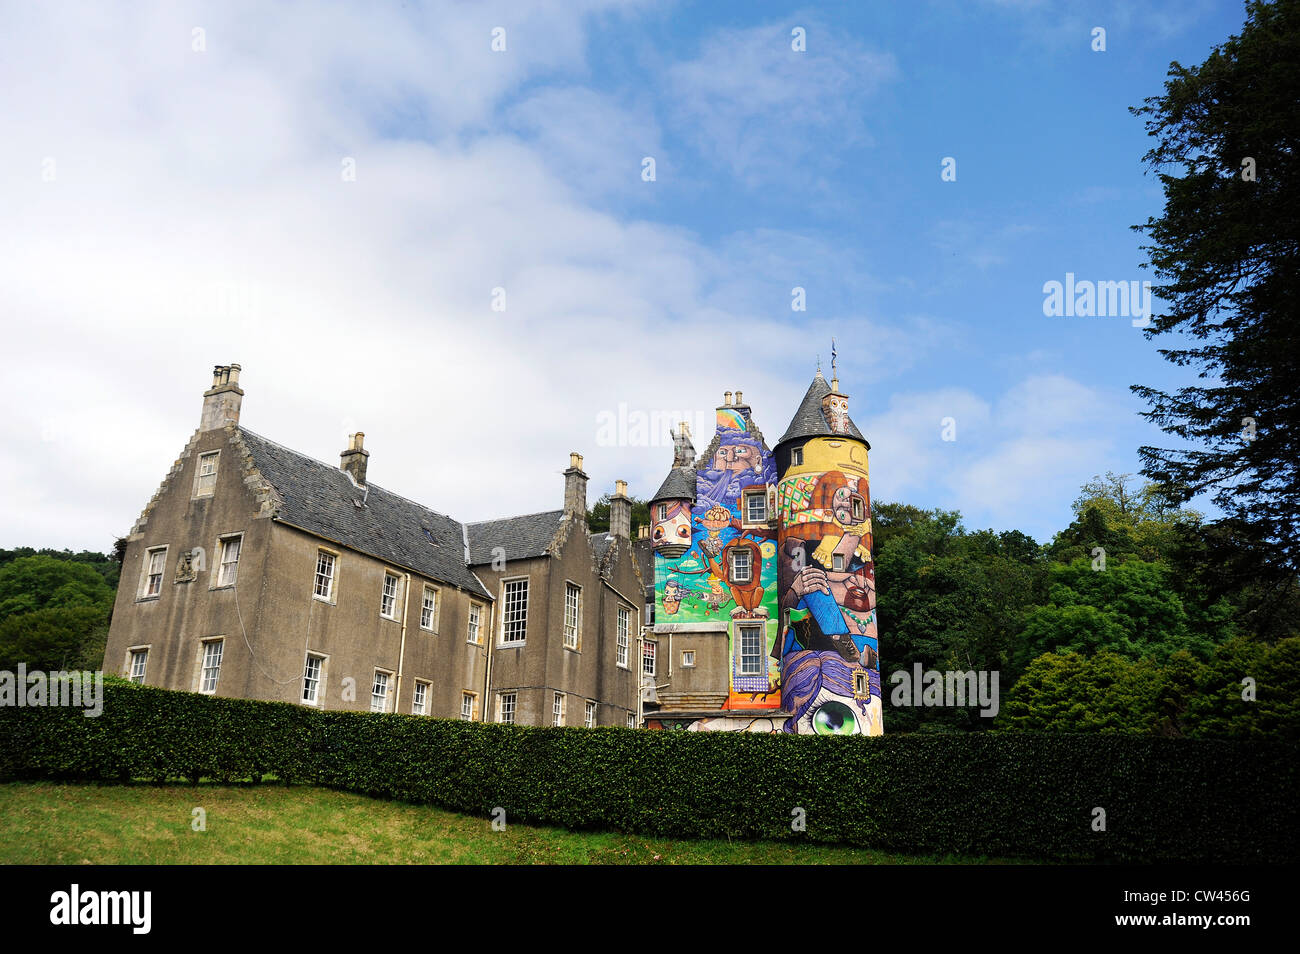 Kelburn Castle Ayrshire Scotland house graffiti art artist country trees estate stately home Scottish paint historic landmark Stock Photo